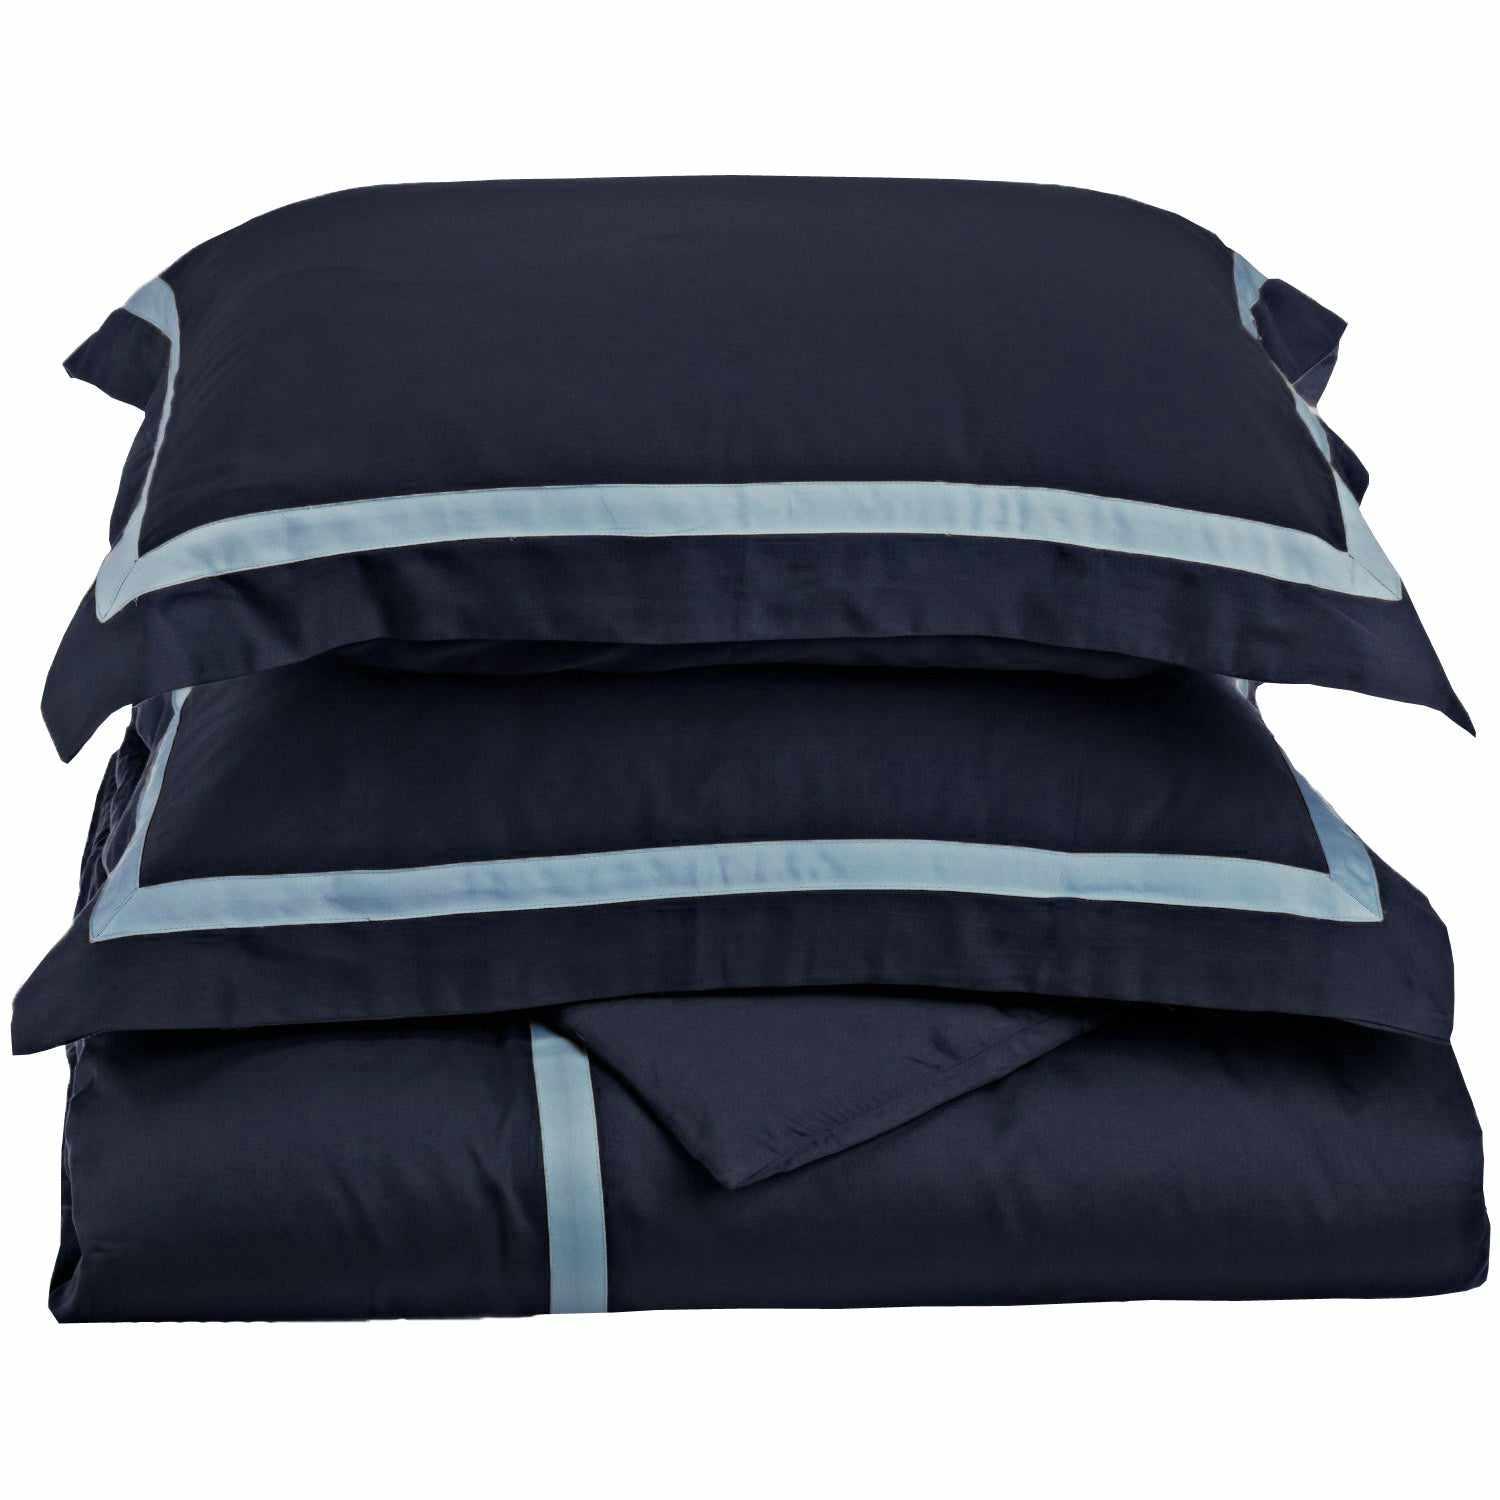  Superior Hotel Applique Stripe Egyptian Cotton Duvet Cover Set -  Navy Blue/Light Blue